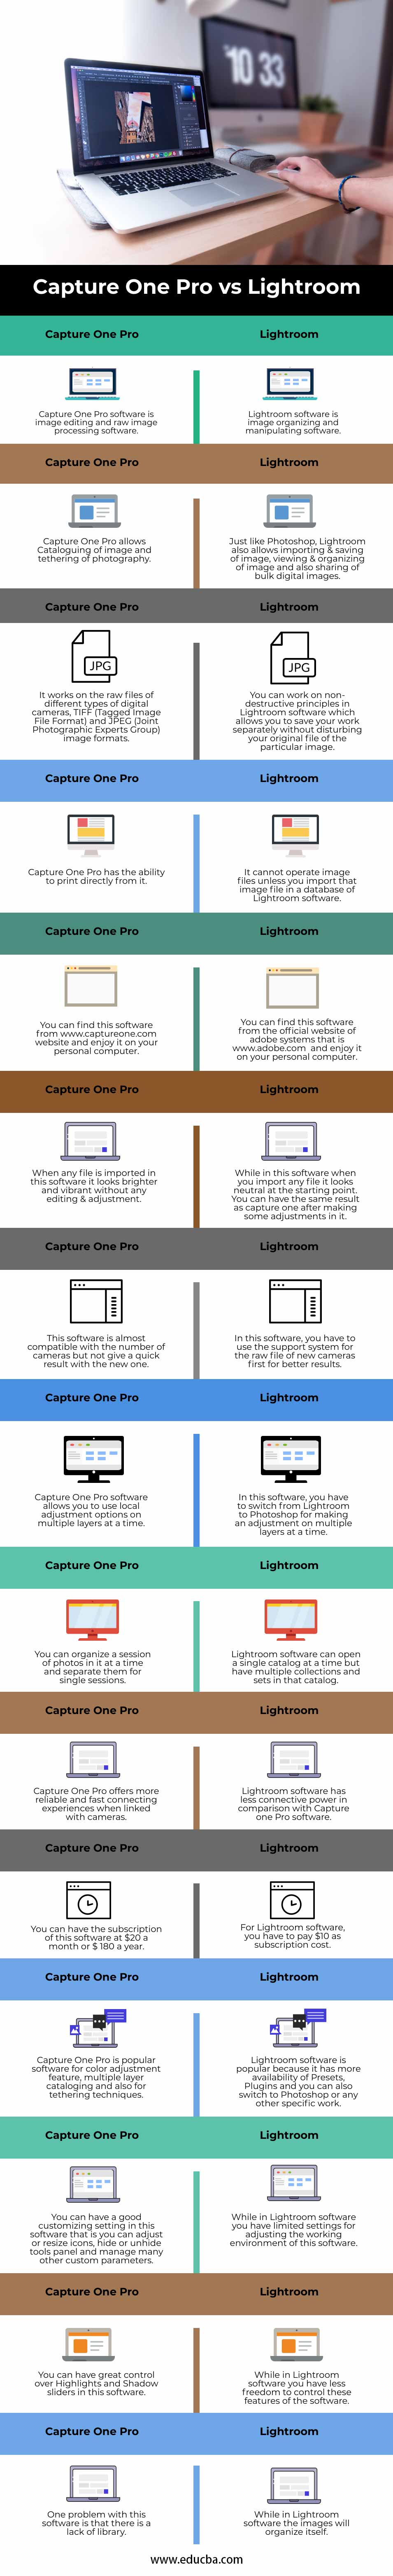 Capture One Pro vs Lightroom info